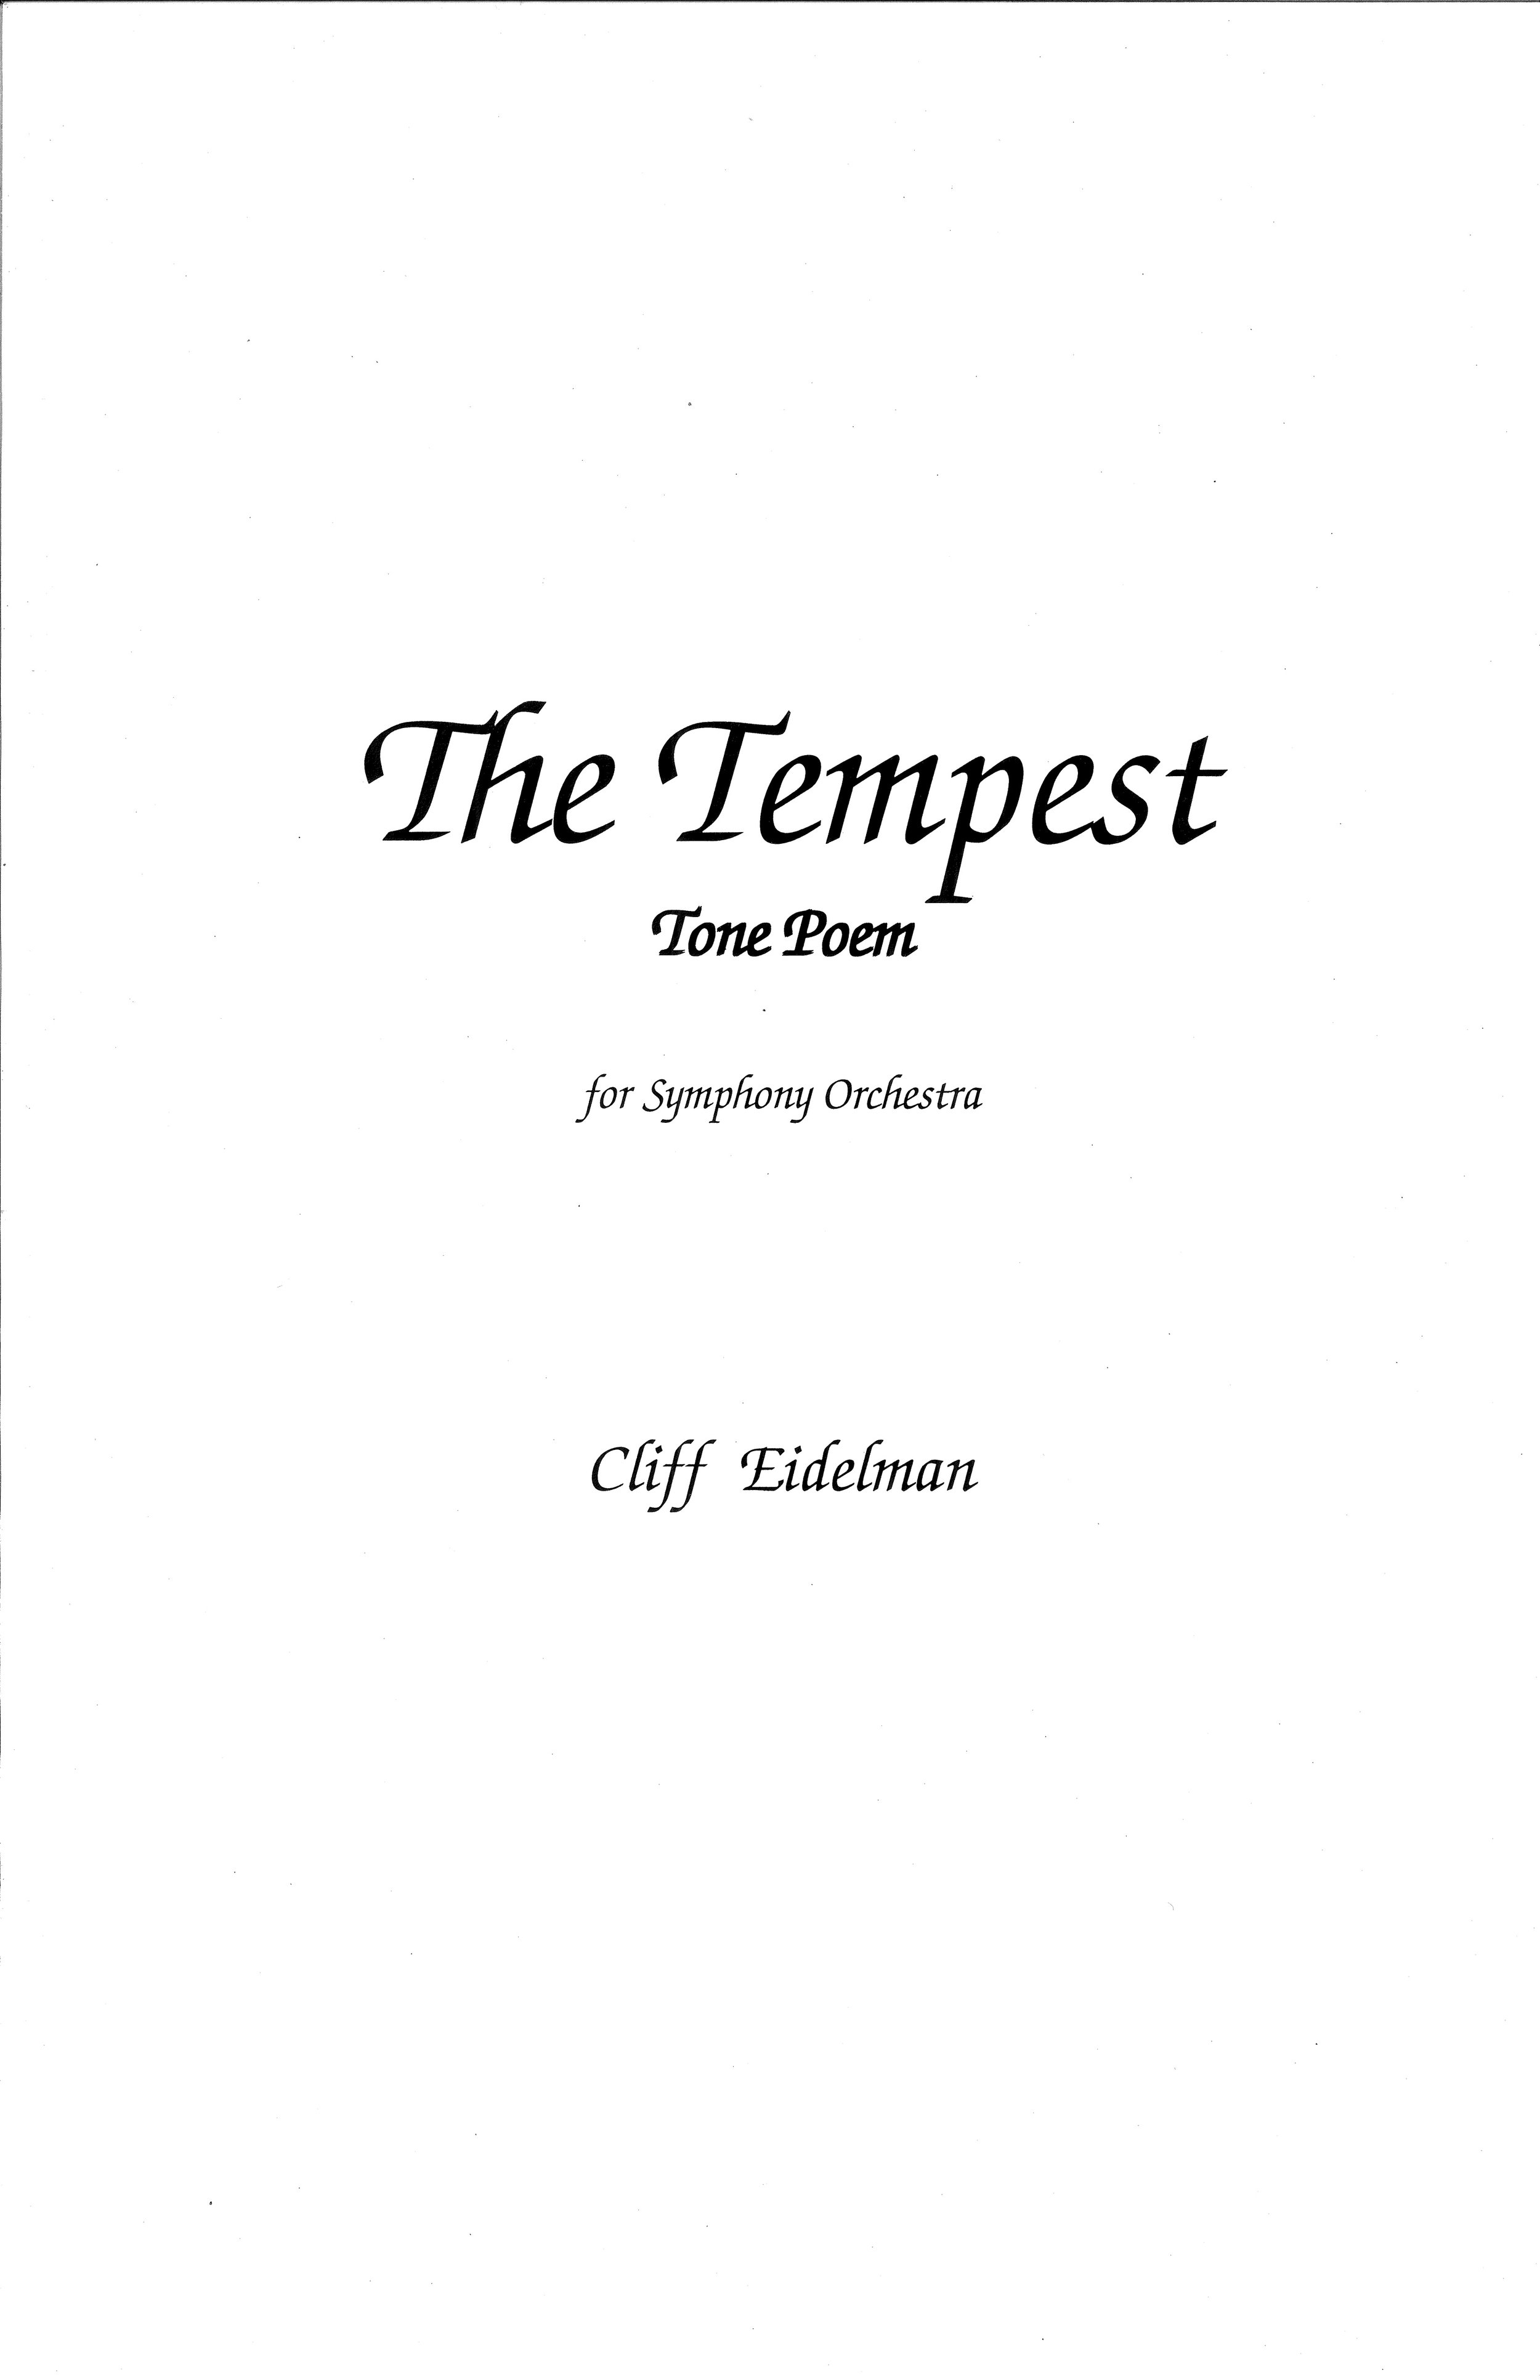 The Tempest Score p1.jpg